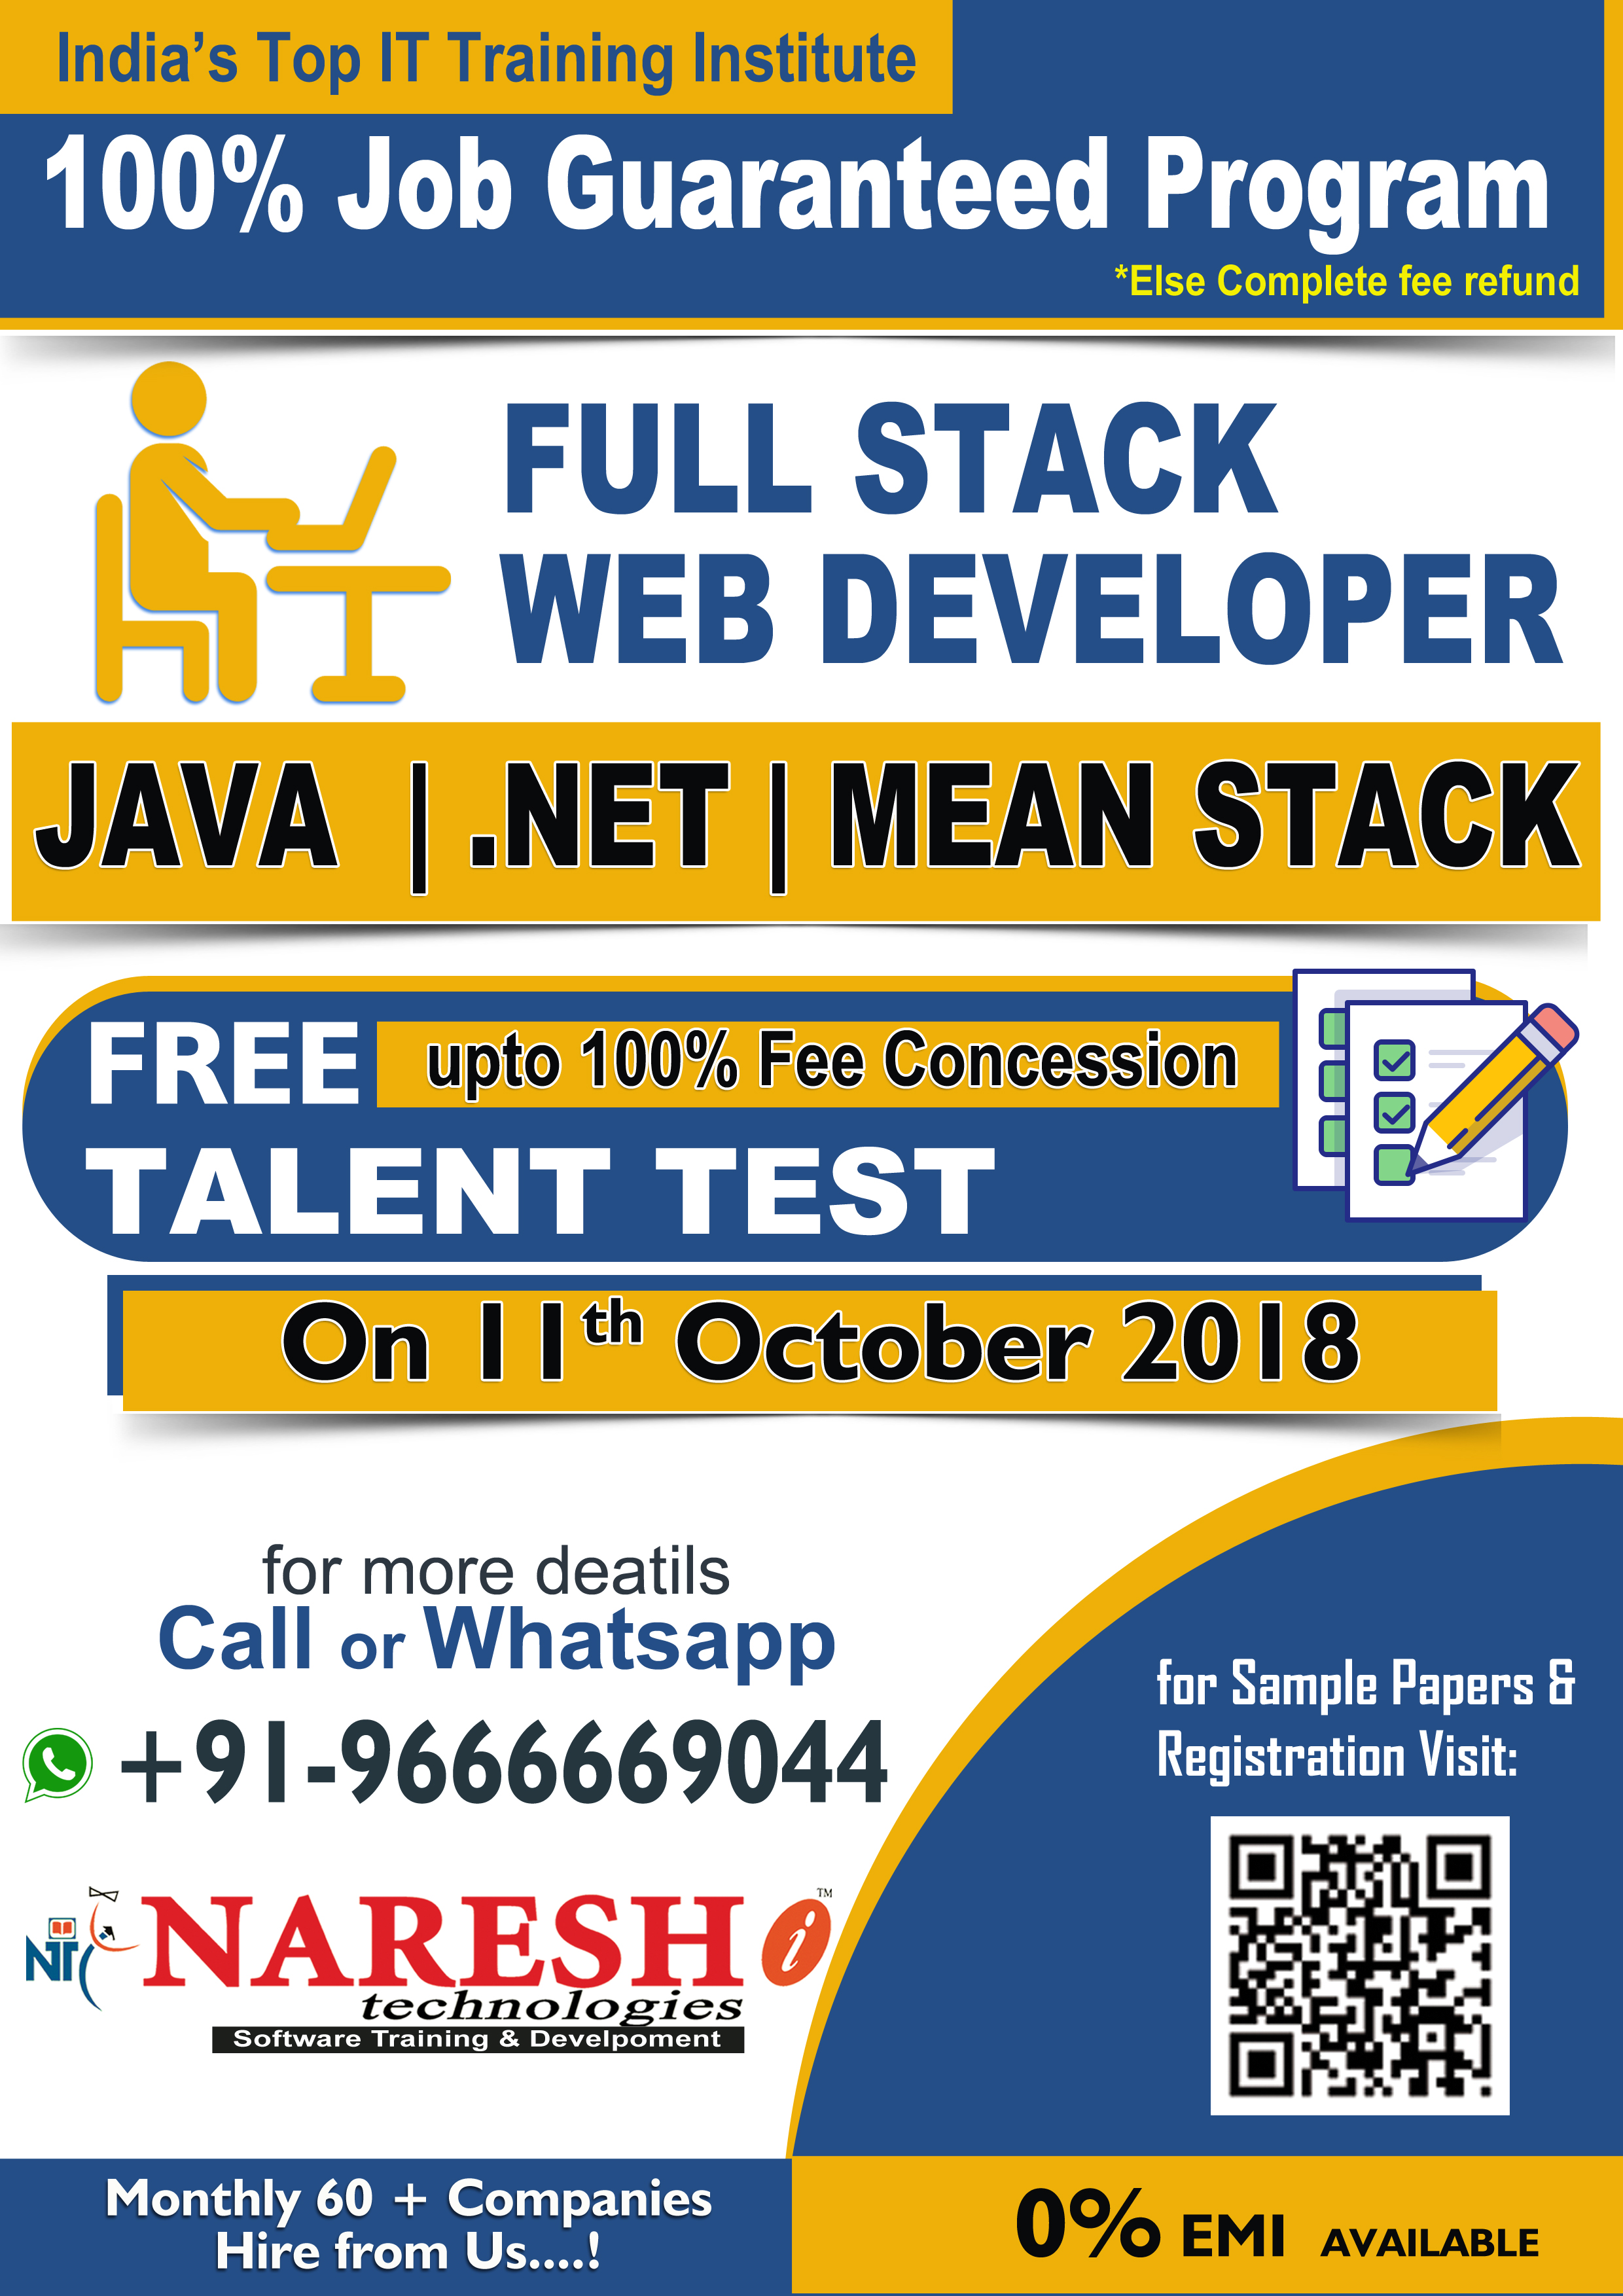 Job guaranteed Program on Full Stack Web Developer - NareshIT, Hyderabad, Telangana, India